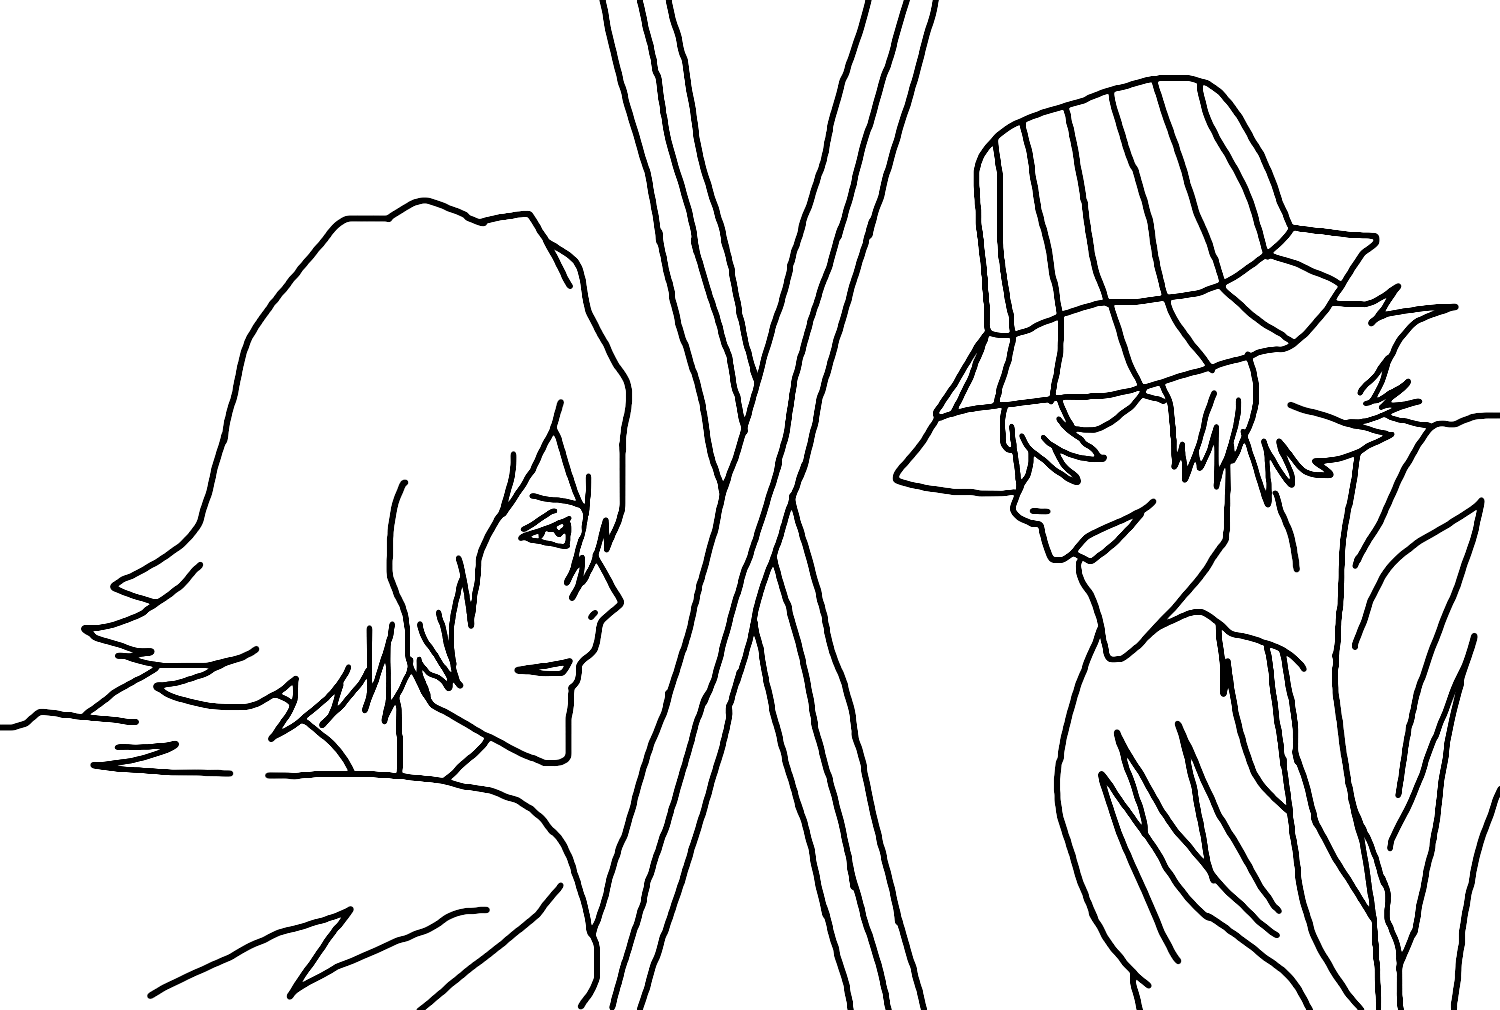 Urahara vs Reigai Coloring Page from Kisuke Urahara